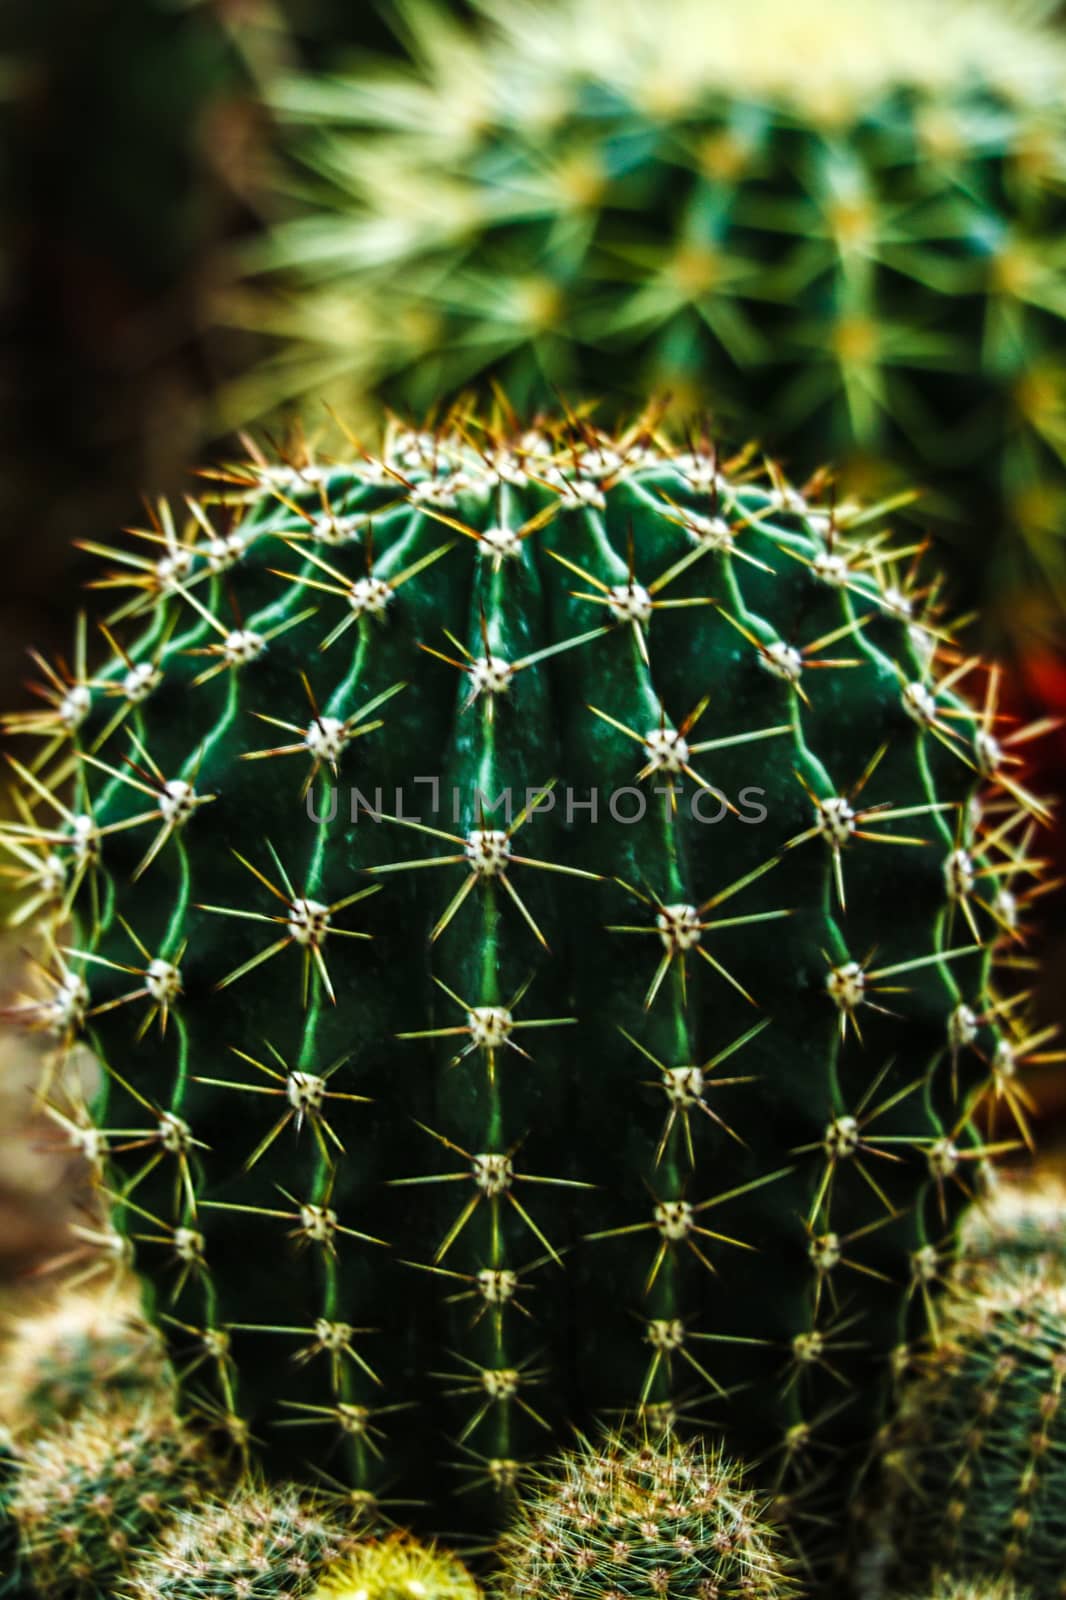 thorn cactus texture background, close up